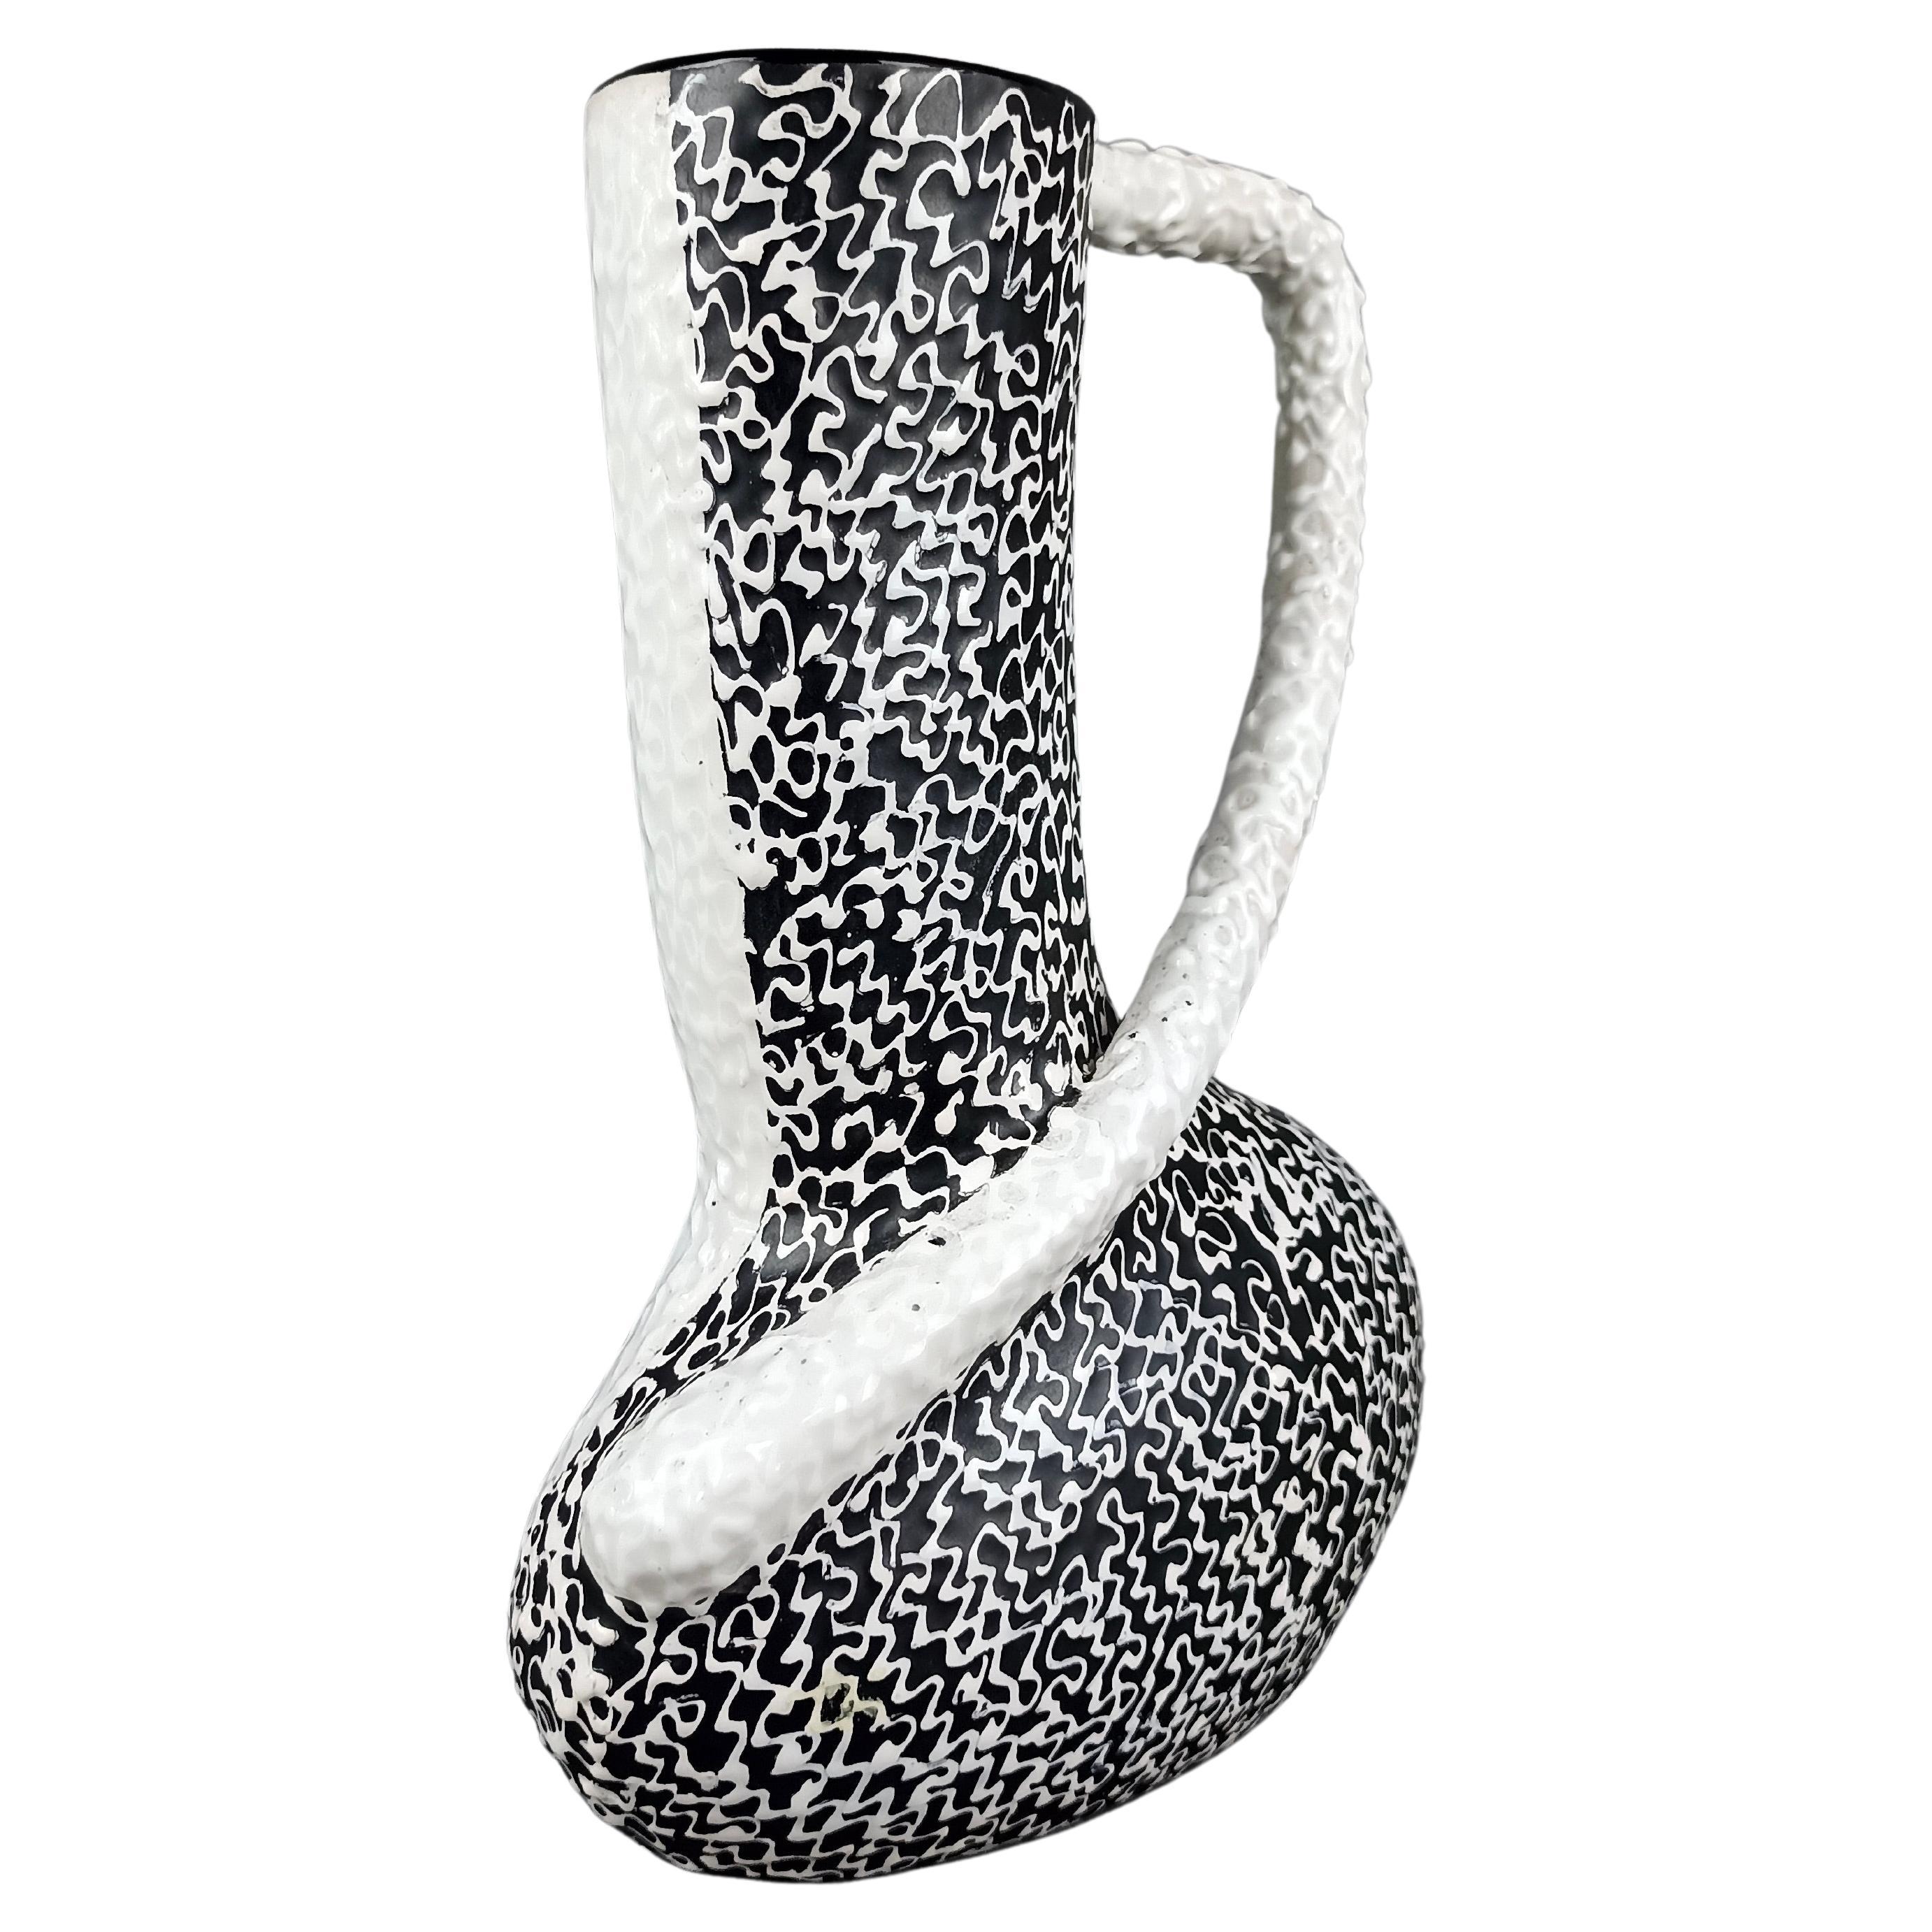 1950s Italian Santucci Deruta asymmetrical black and white ceramic vase.